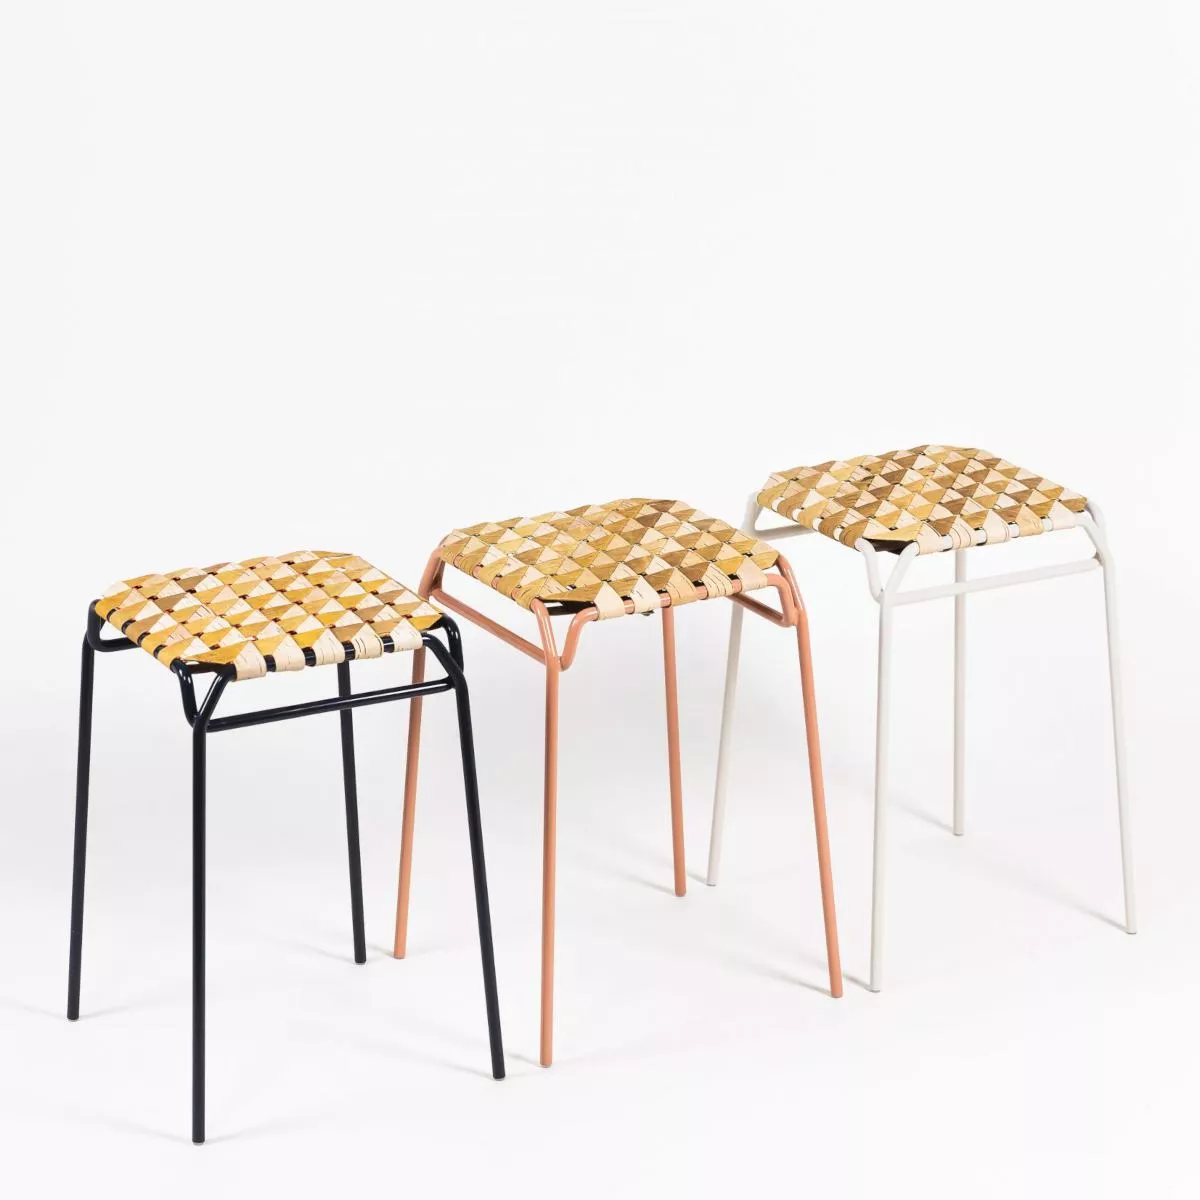 Design Stool with Artfully Folded Tree Bark Seat